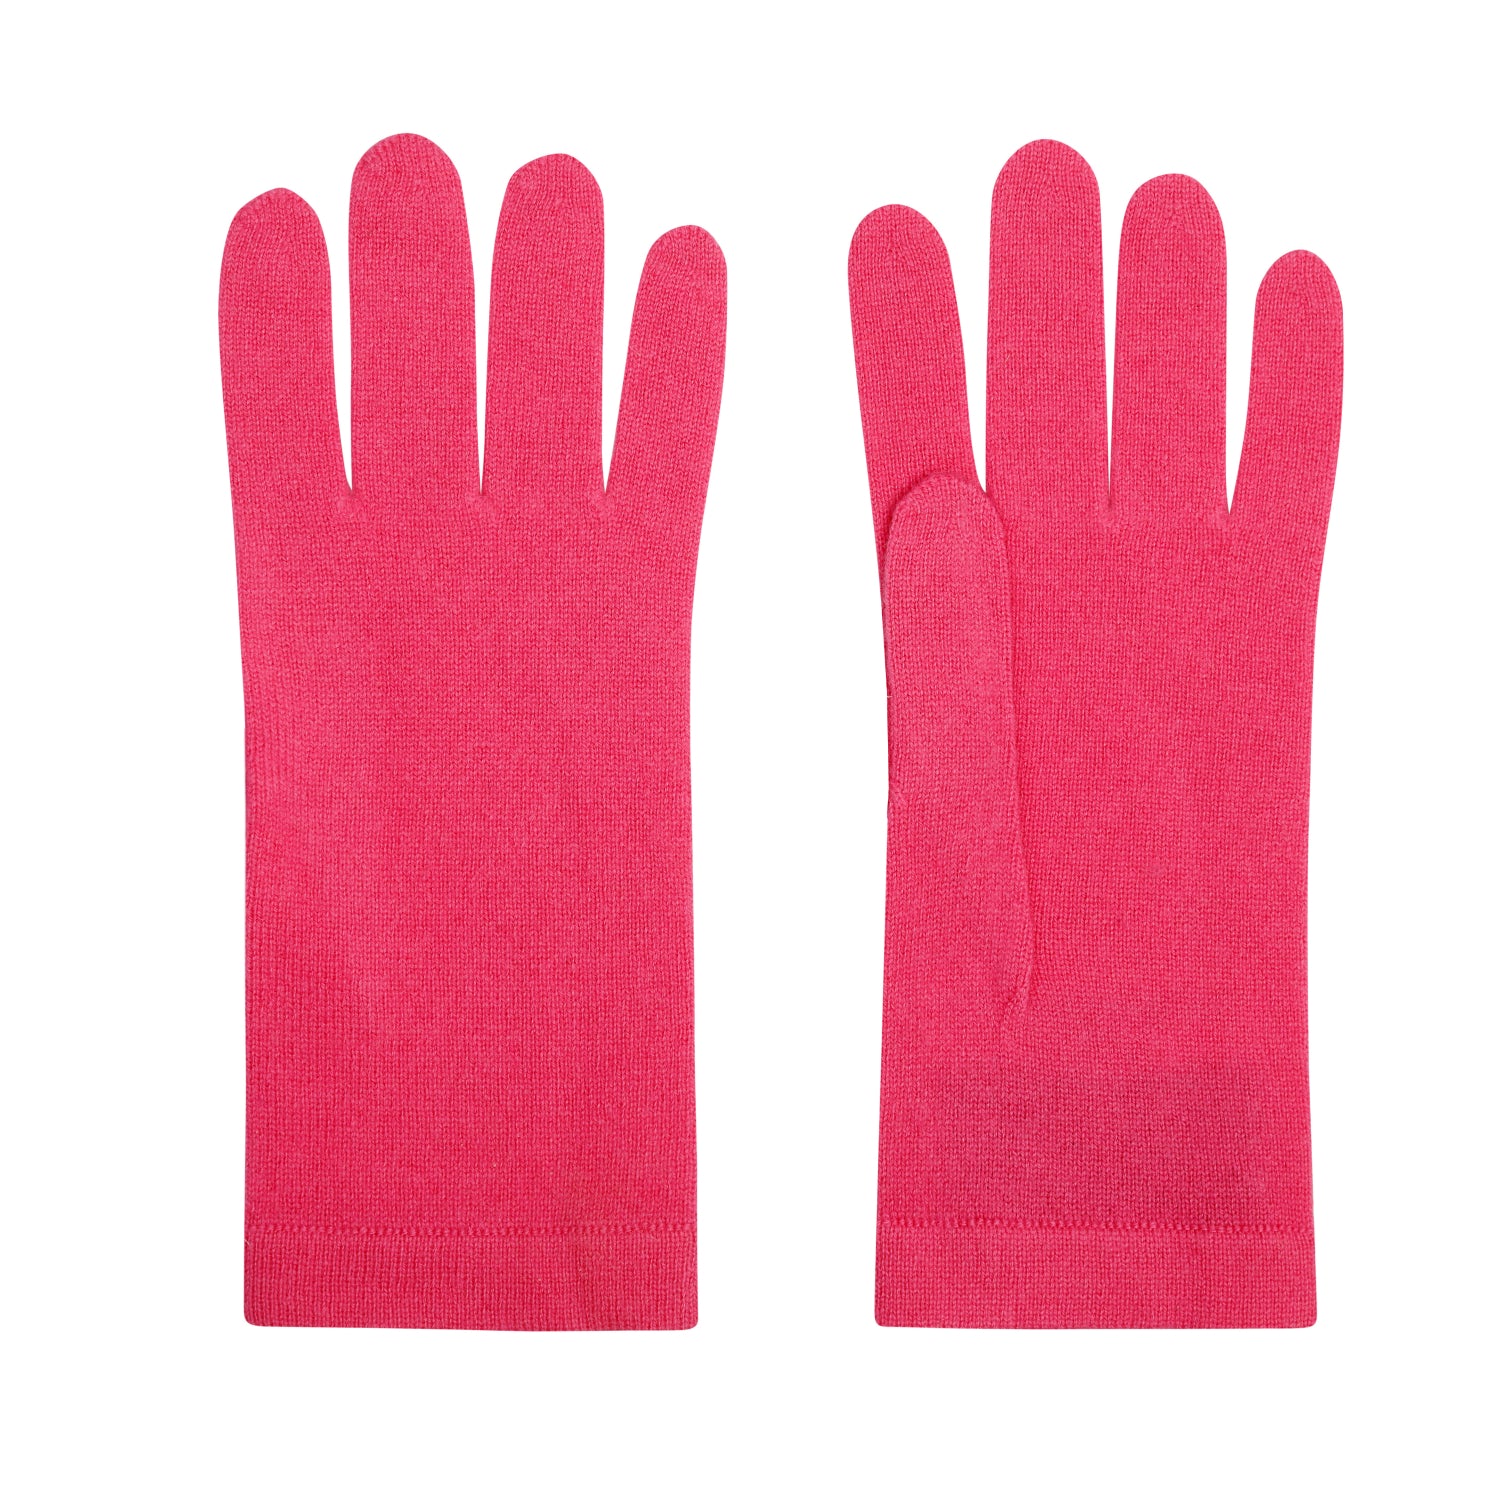 cashmere gloves pink